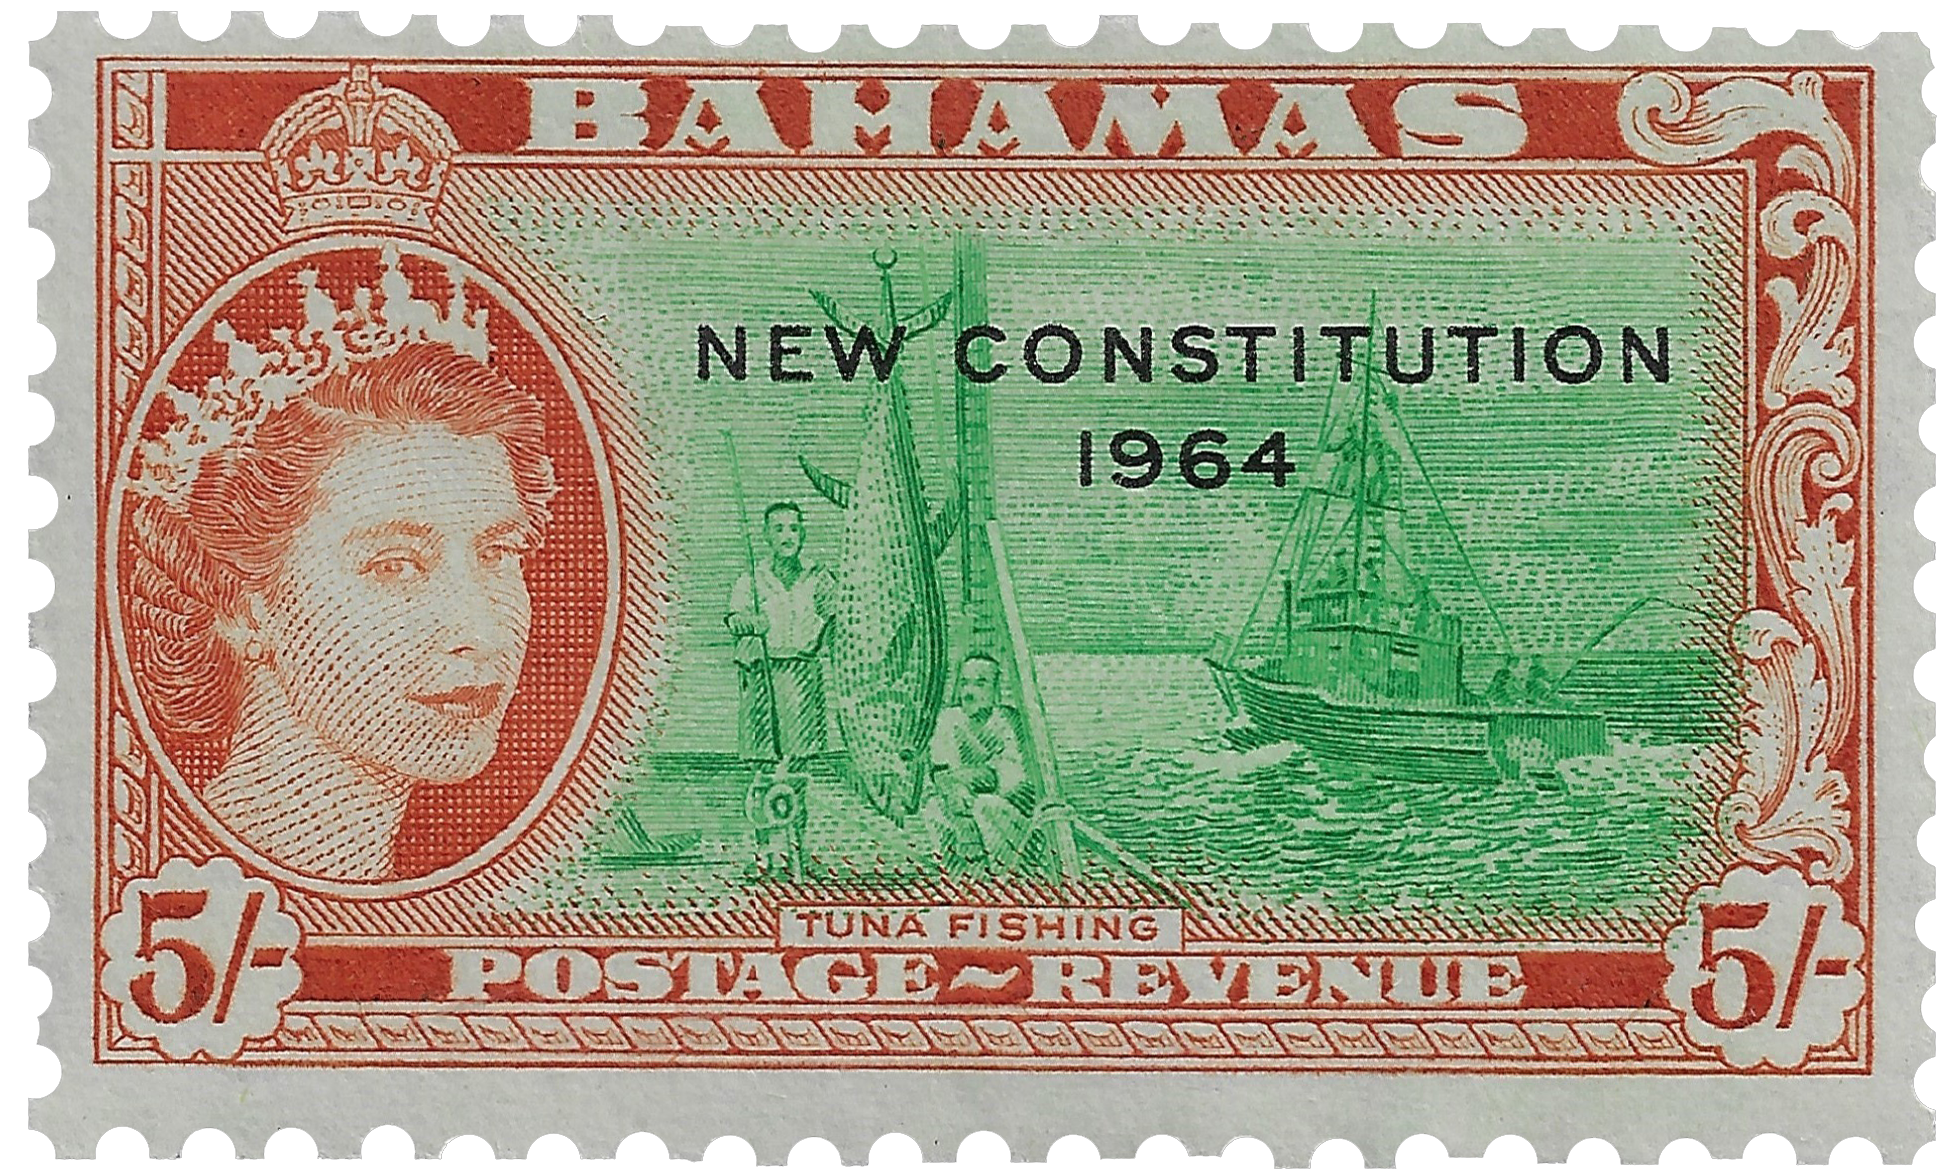 5s 1964, Tuna Fishing, New Constitution